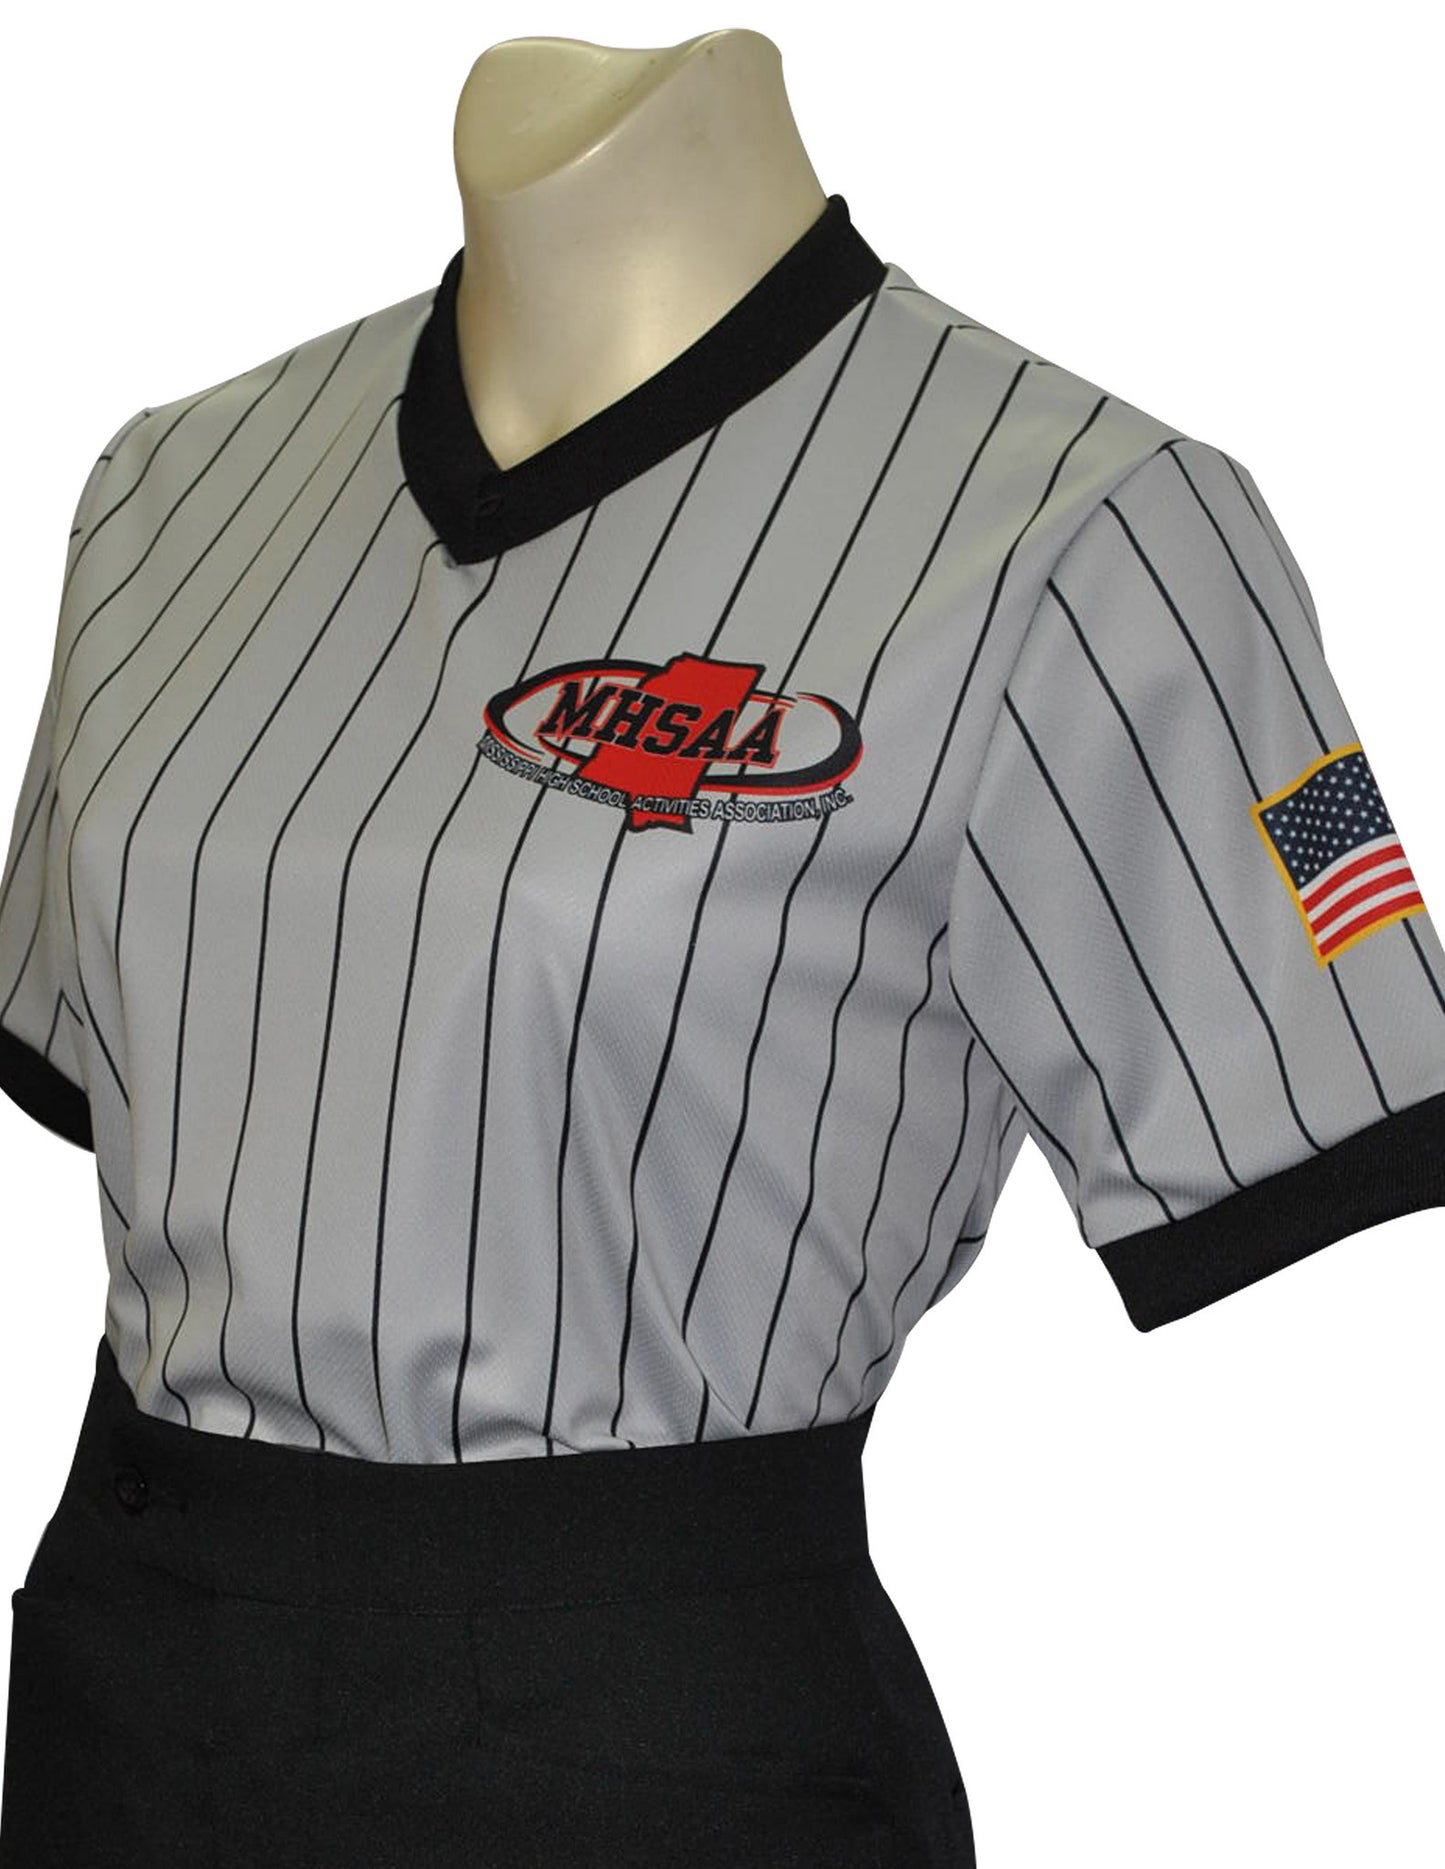 USA286MS- Dye Sub Mississippi Women's Basketball/Wrestling Shirt